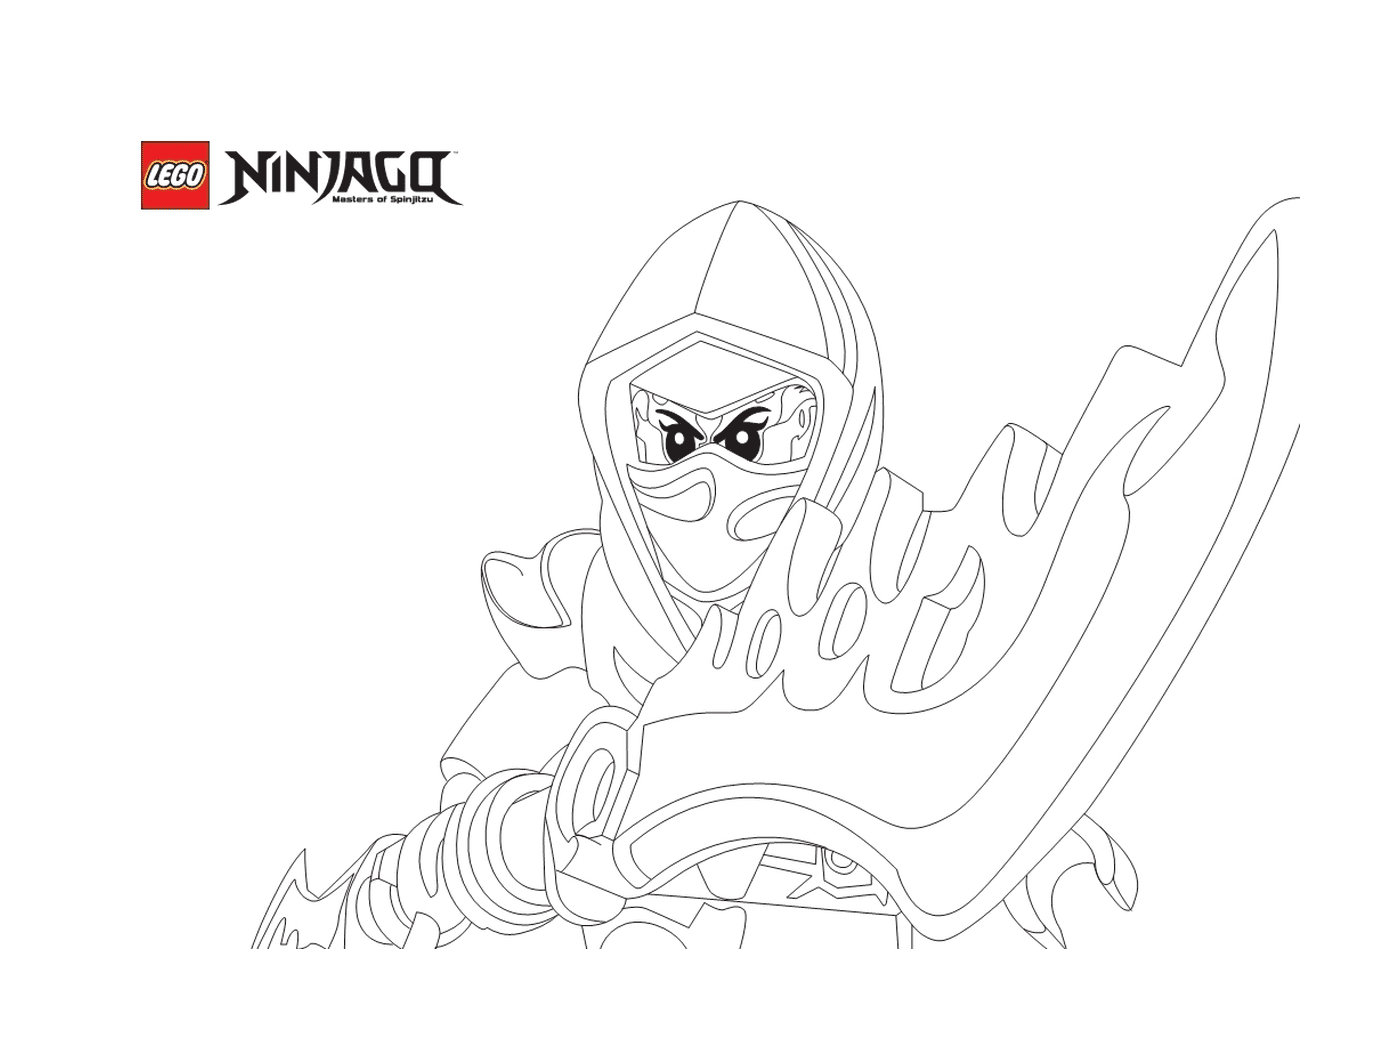  Ninjago mit Schwert bereit zum Angriff 